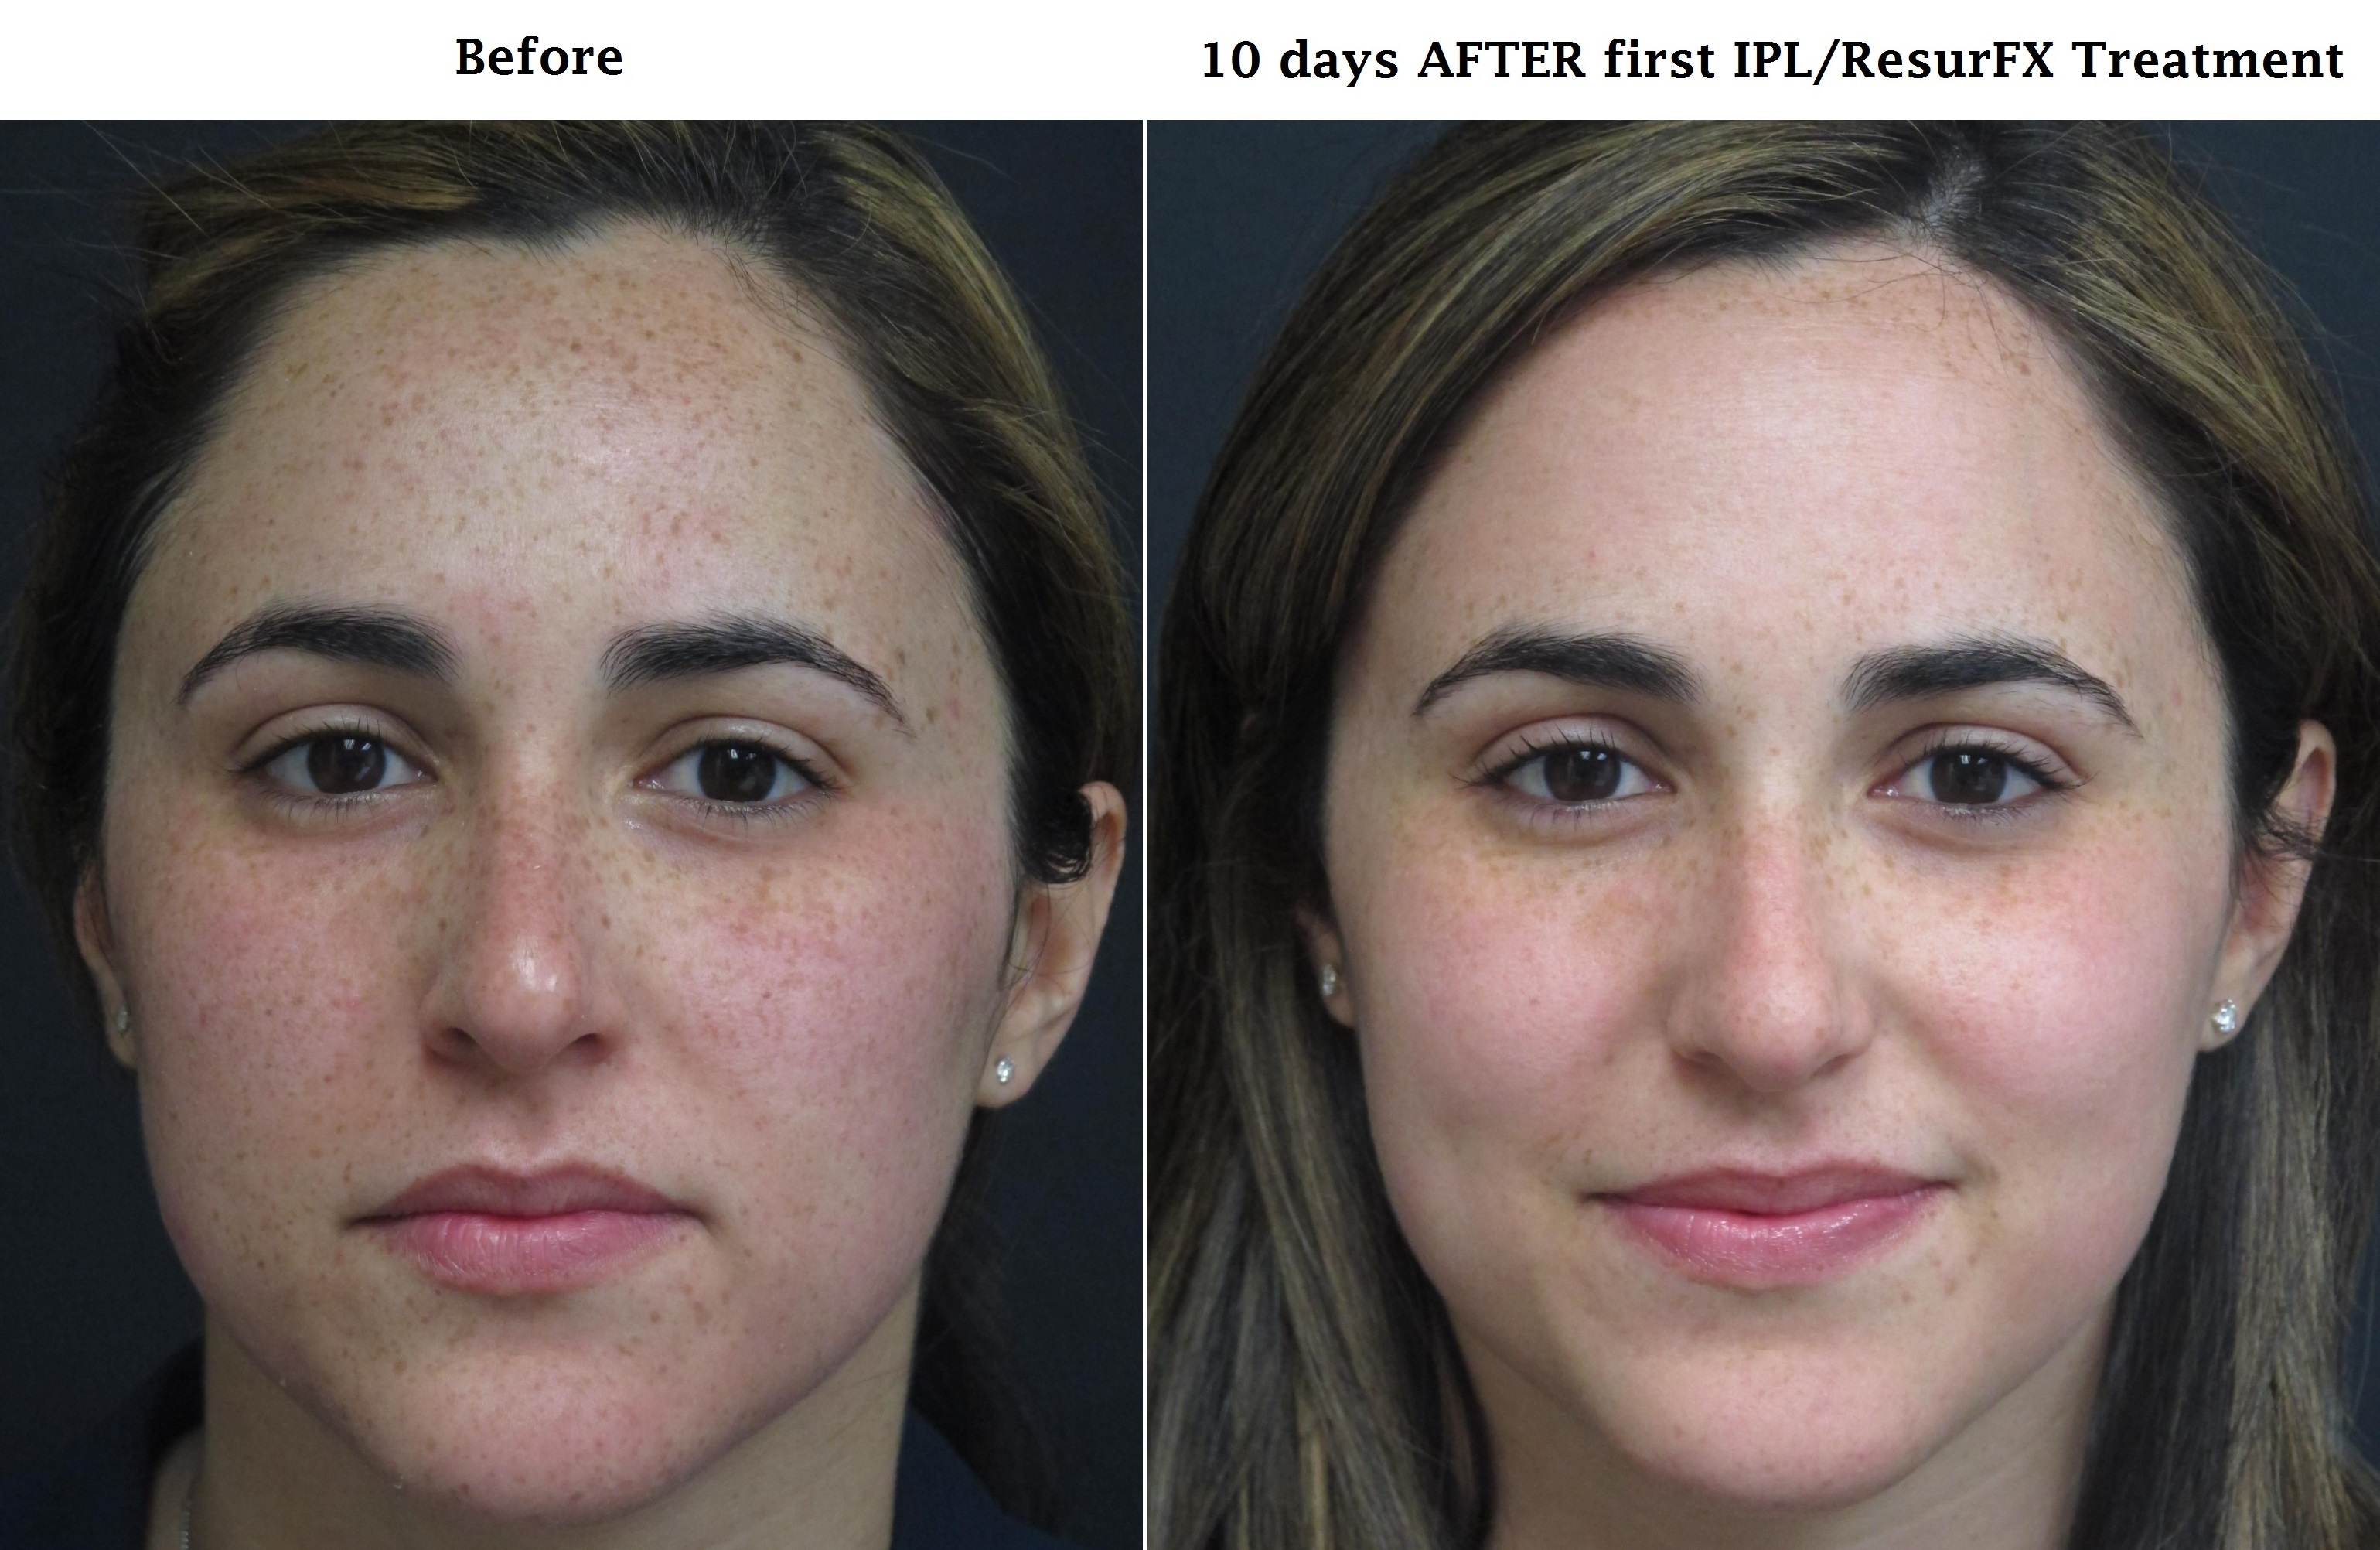 Before and After IPL/ResurFX - Central Florida Dermatology 